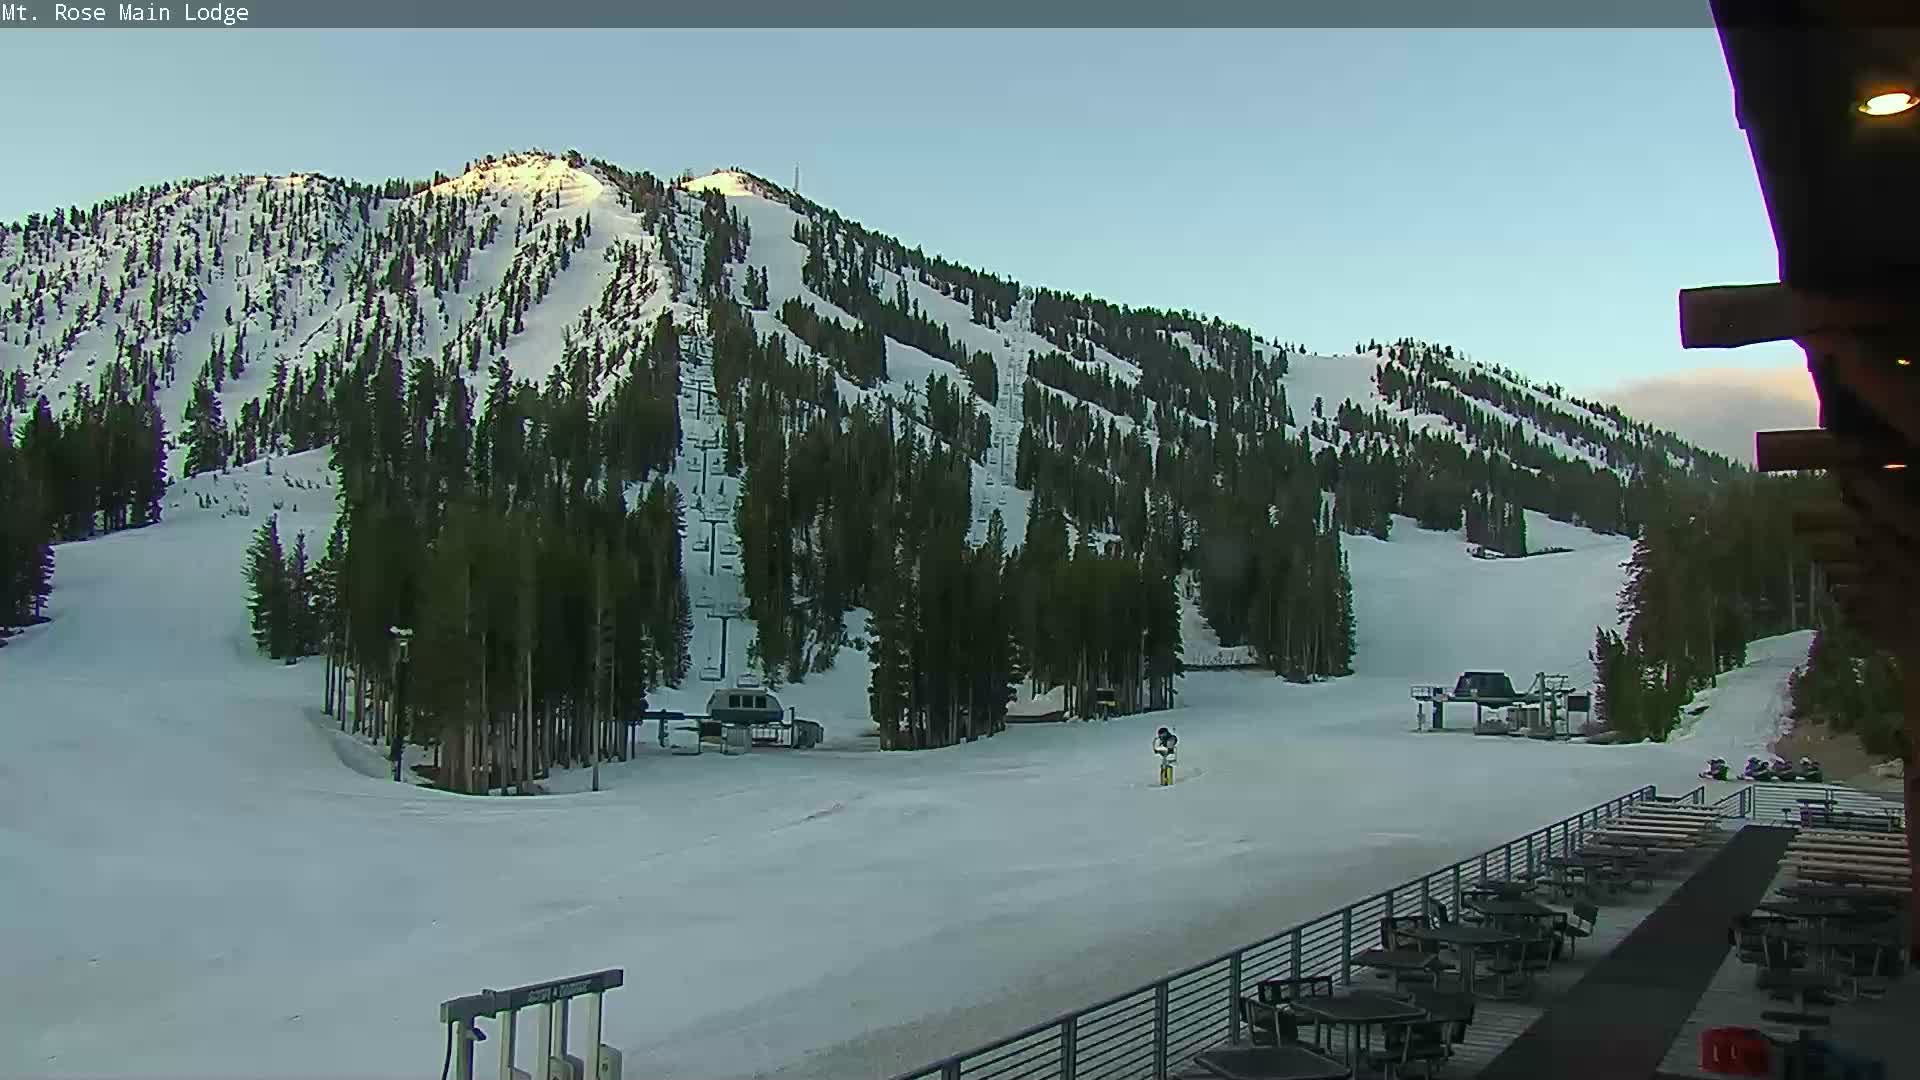 Webcam: Mt. Rose Ski Resort, Nevada